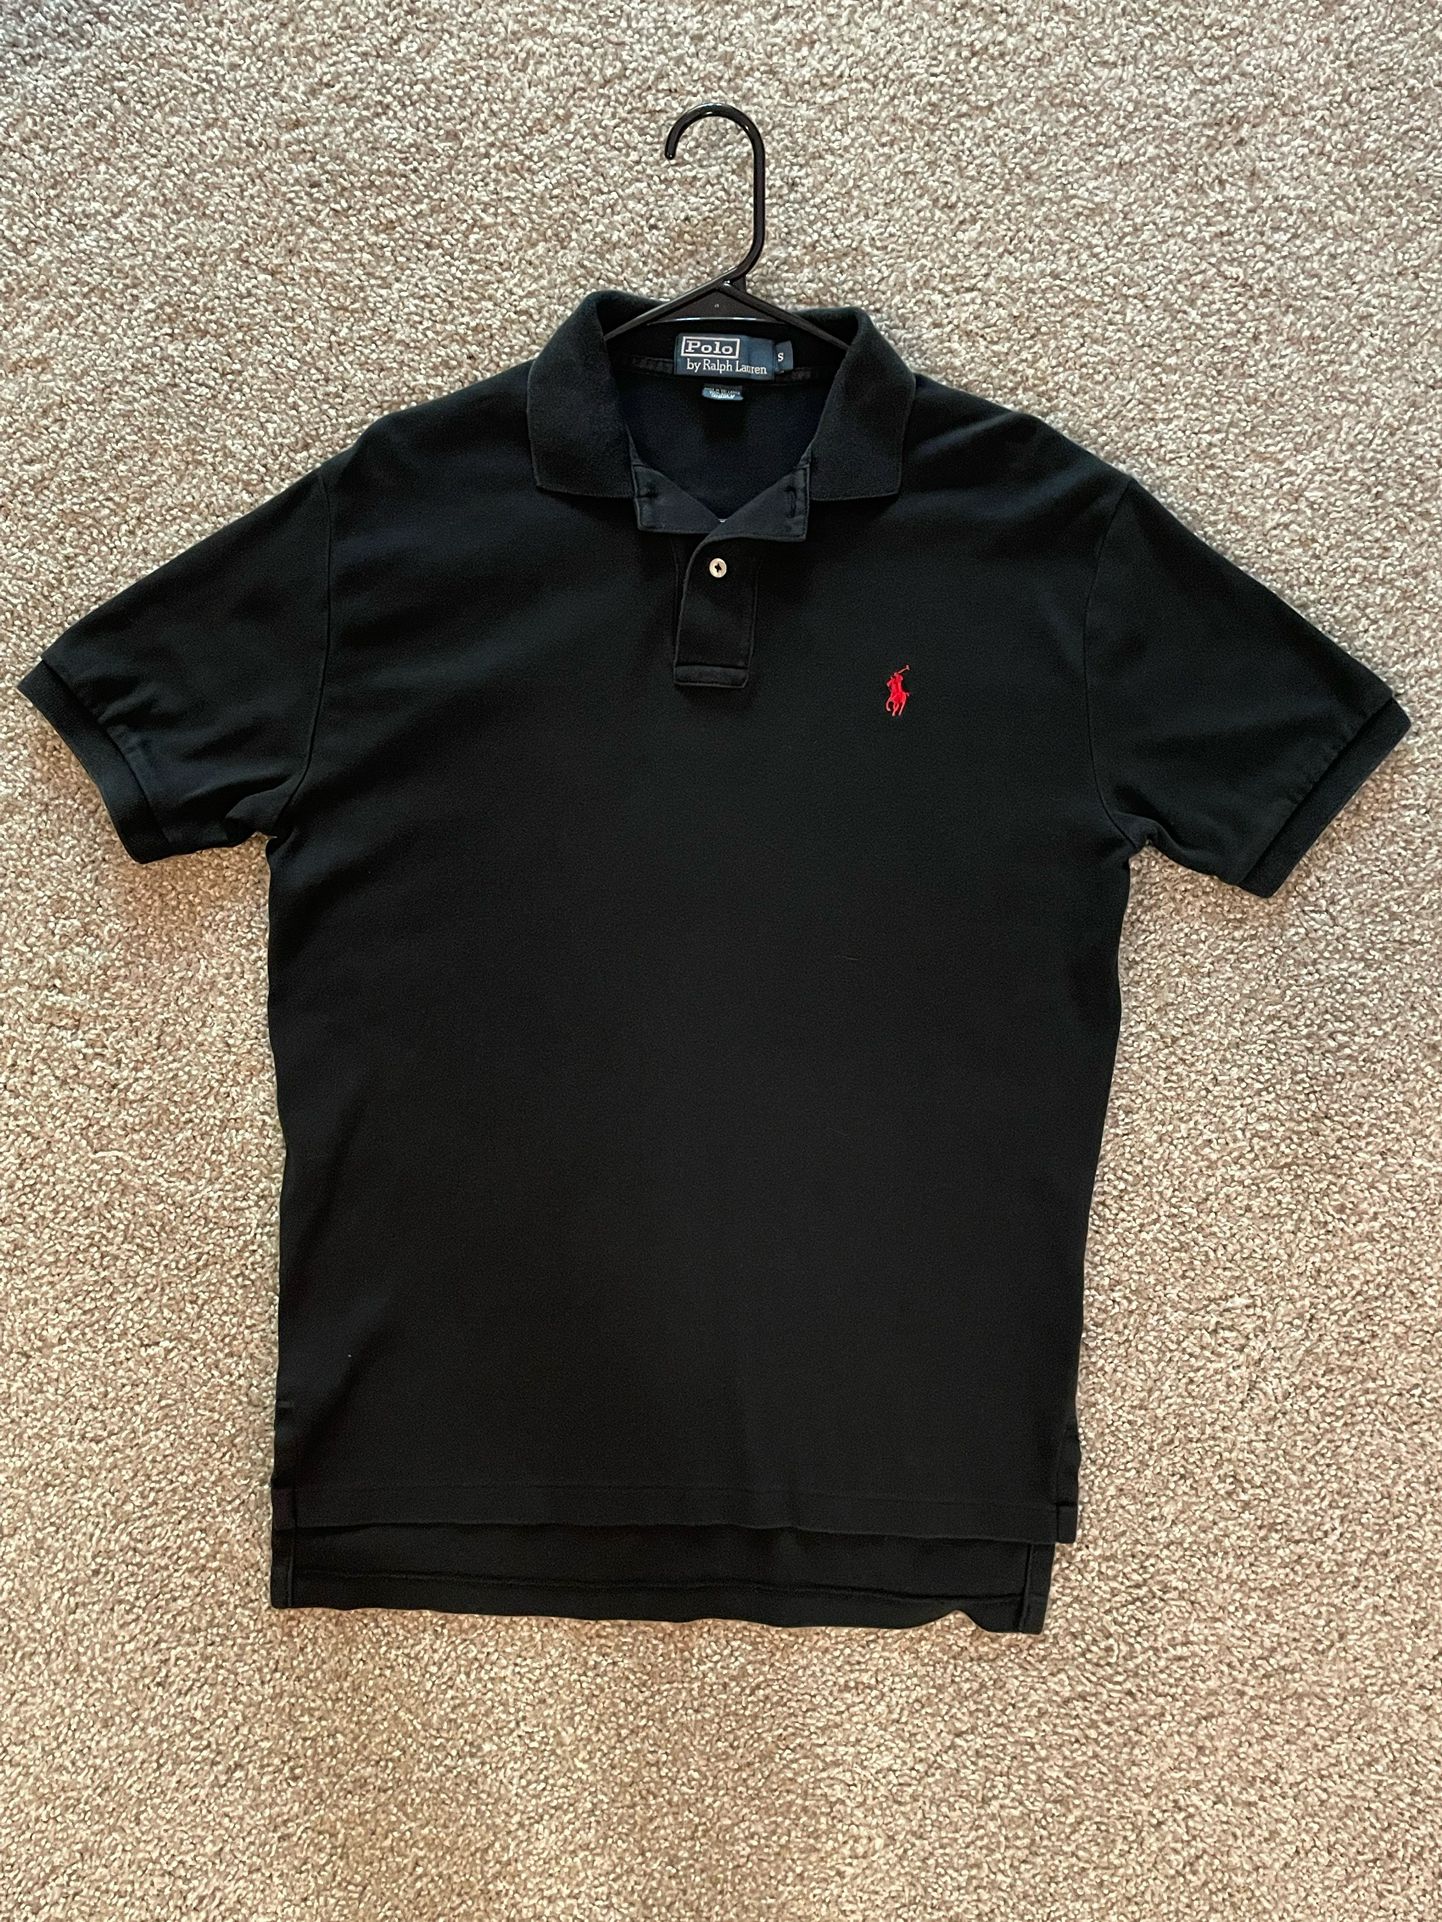 Polo Ralph Lauren Men's Polo Shirt S Short Sleeve Black W/ Red Pony